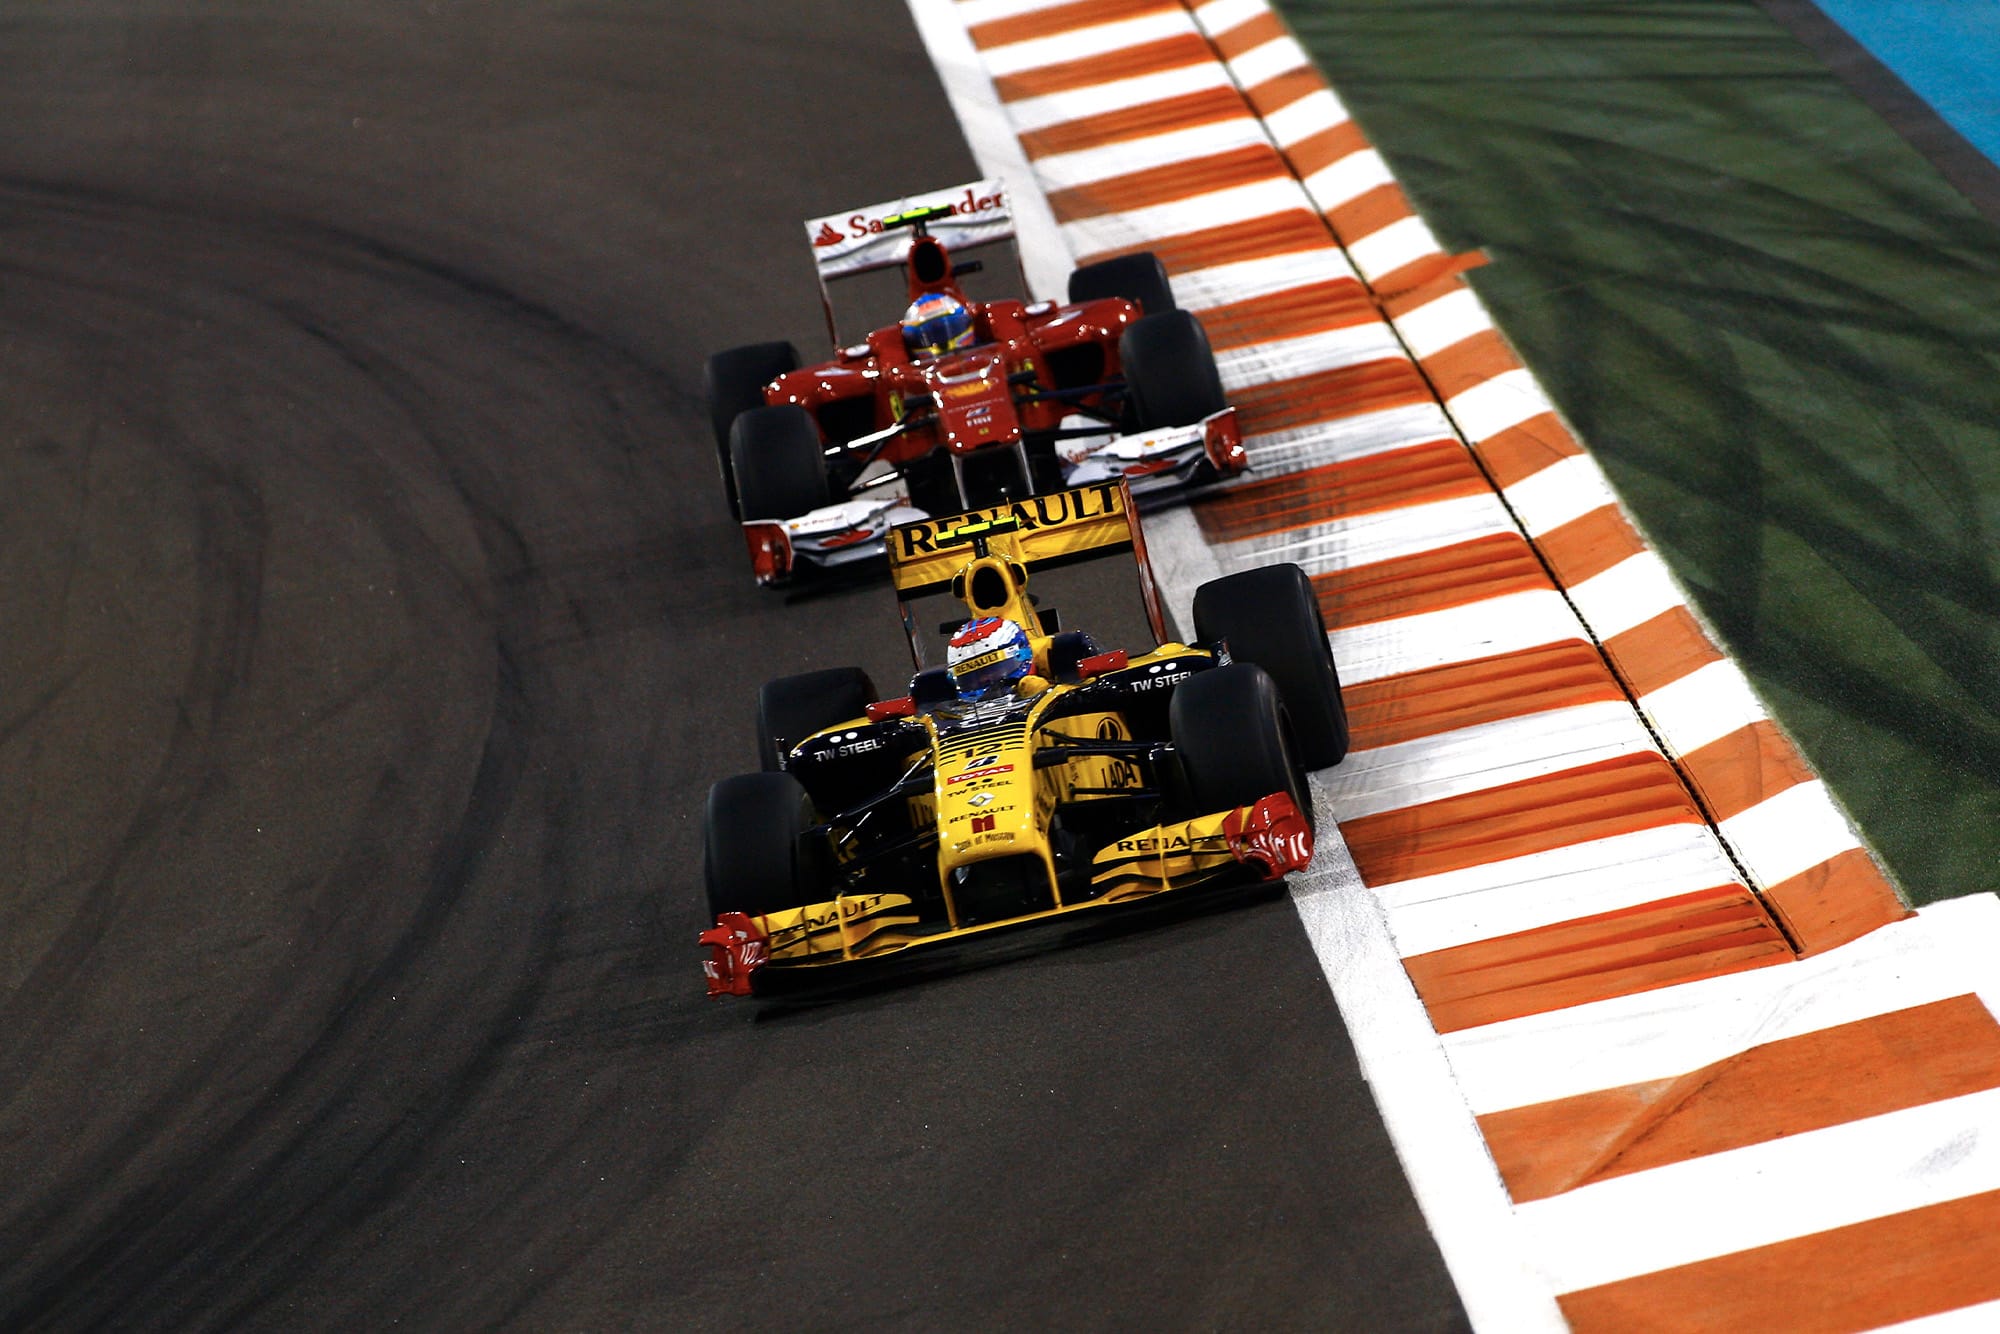 Fernando Alonso stuck behind Vitaly Petrov during the 2010 Abu Dhabi Grand Prix